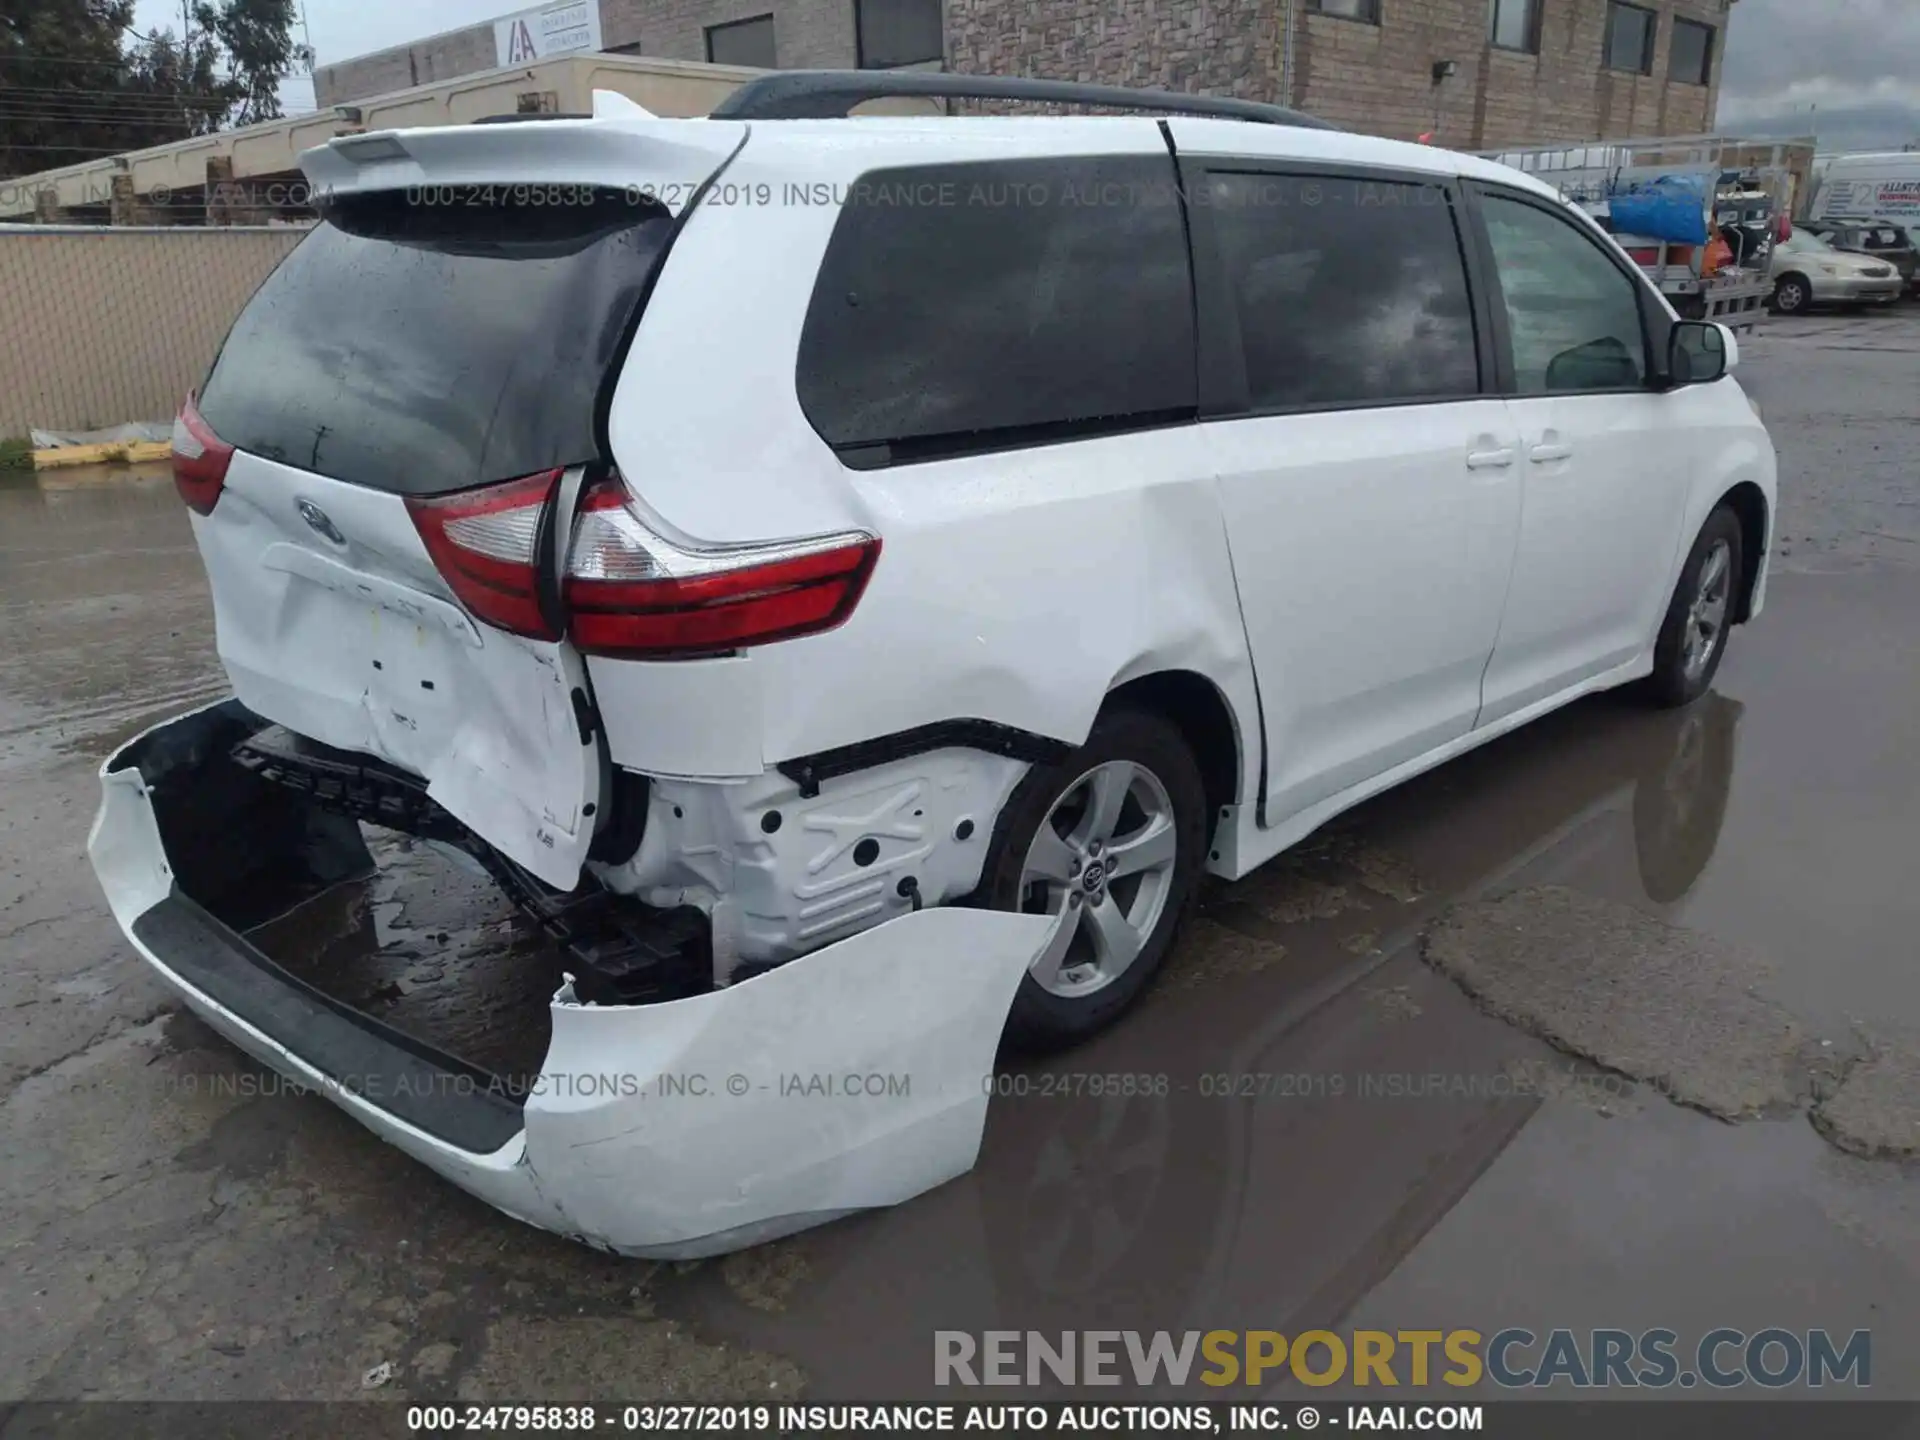 4 Photograph of a damaged car 5TDKZ3DC4KS995497 TOYOTA SIENNA 2019